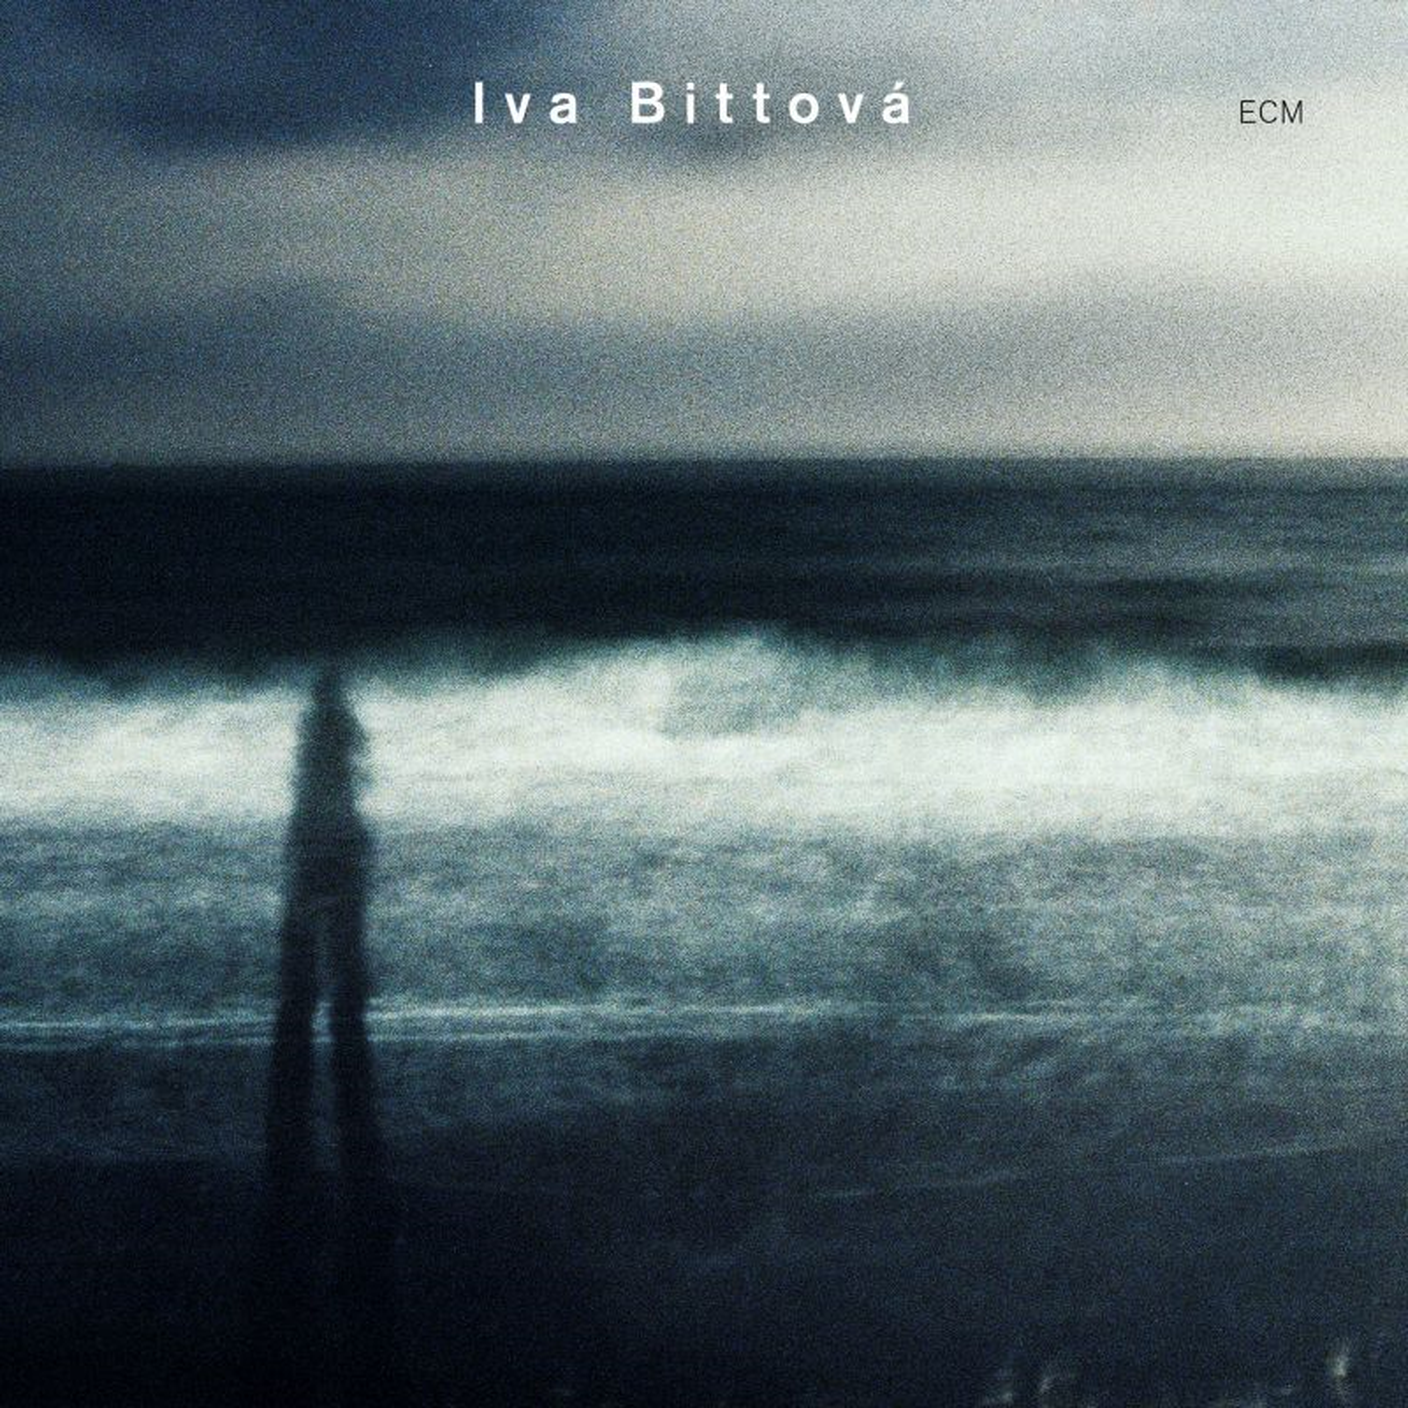 Iva Bittová; "Fragment V"; ECM (dettaglio copertina)